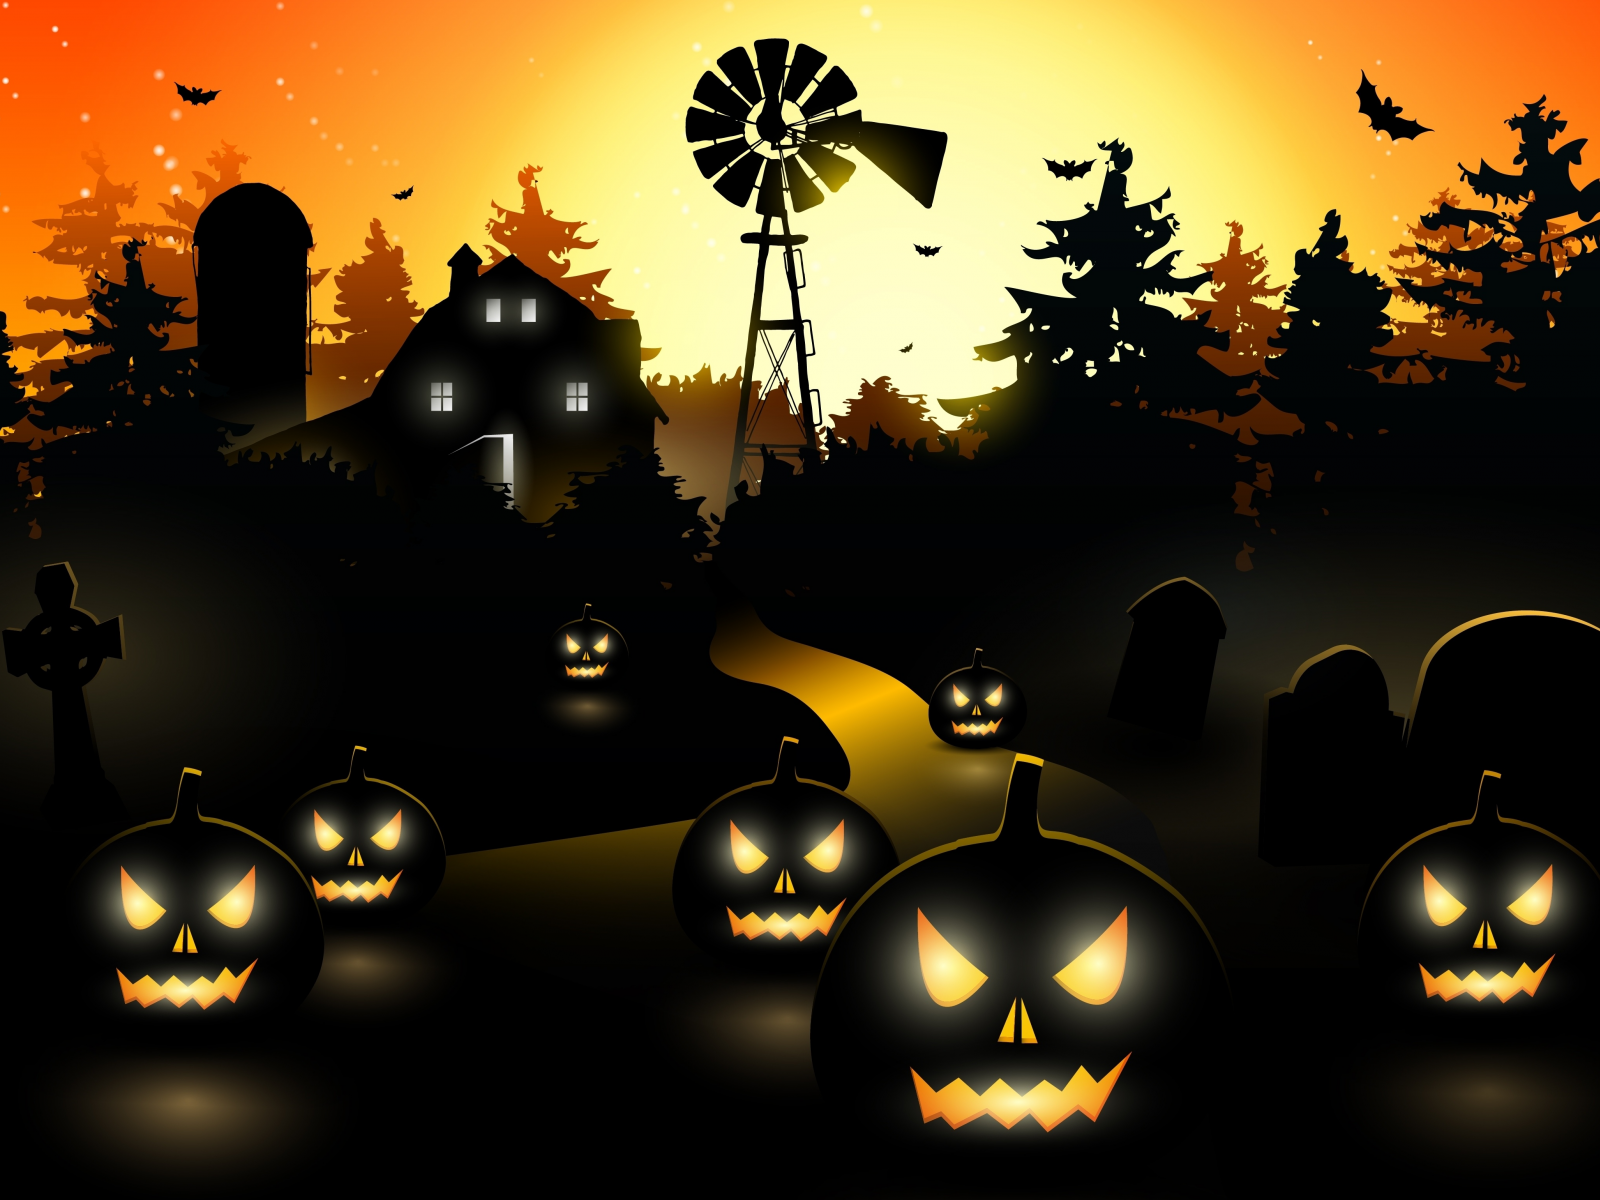 pumpkin, bat, vector, creepy, holiday halloween, trees, midnight, horror, scary town